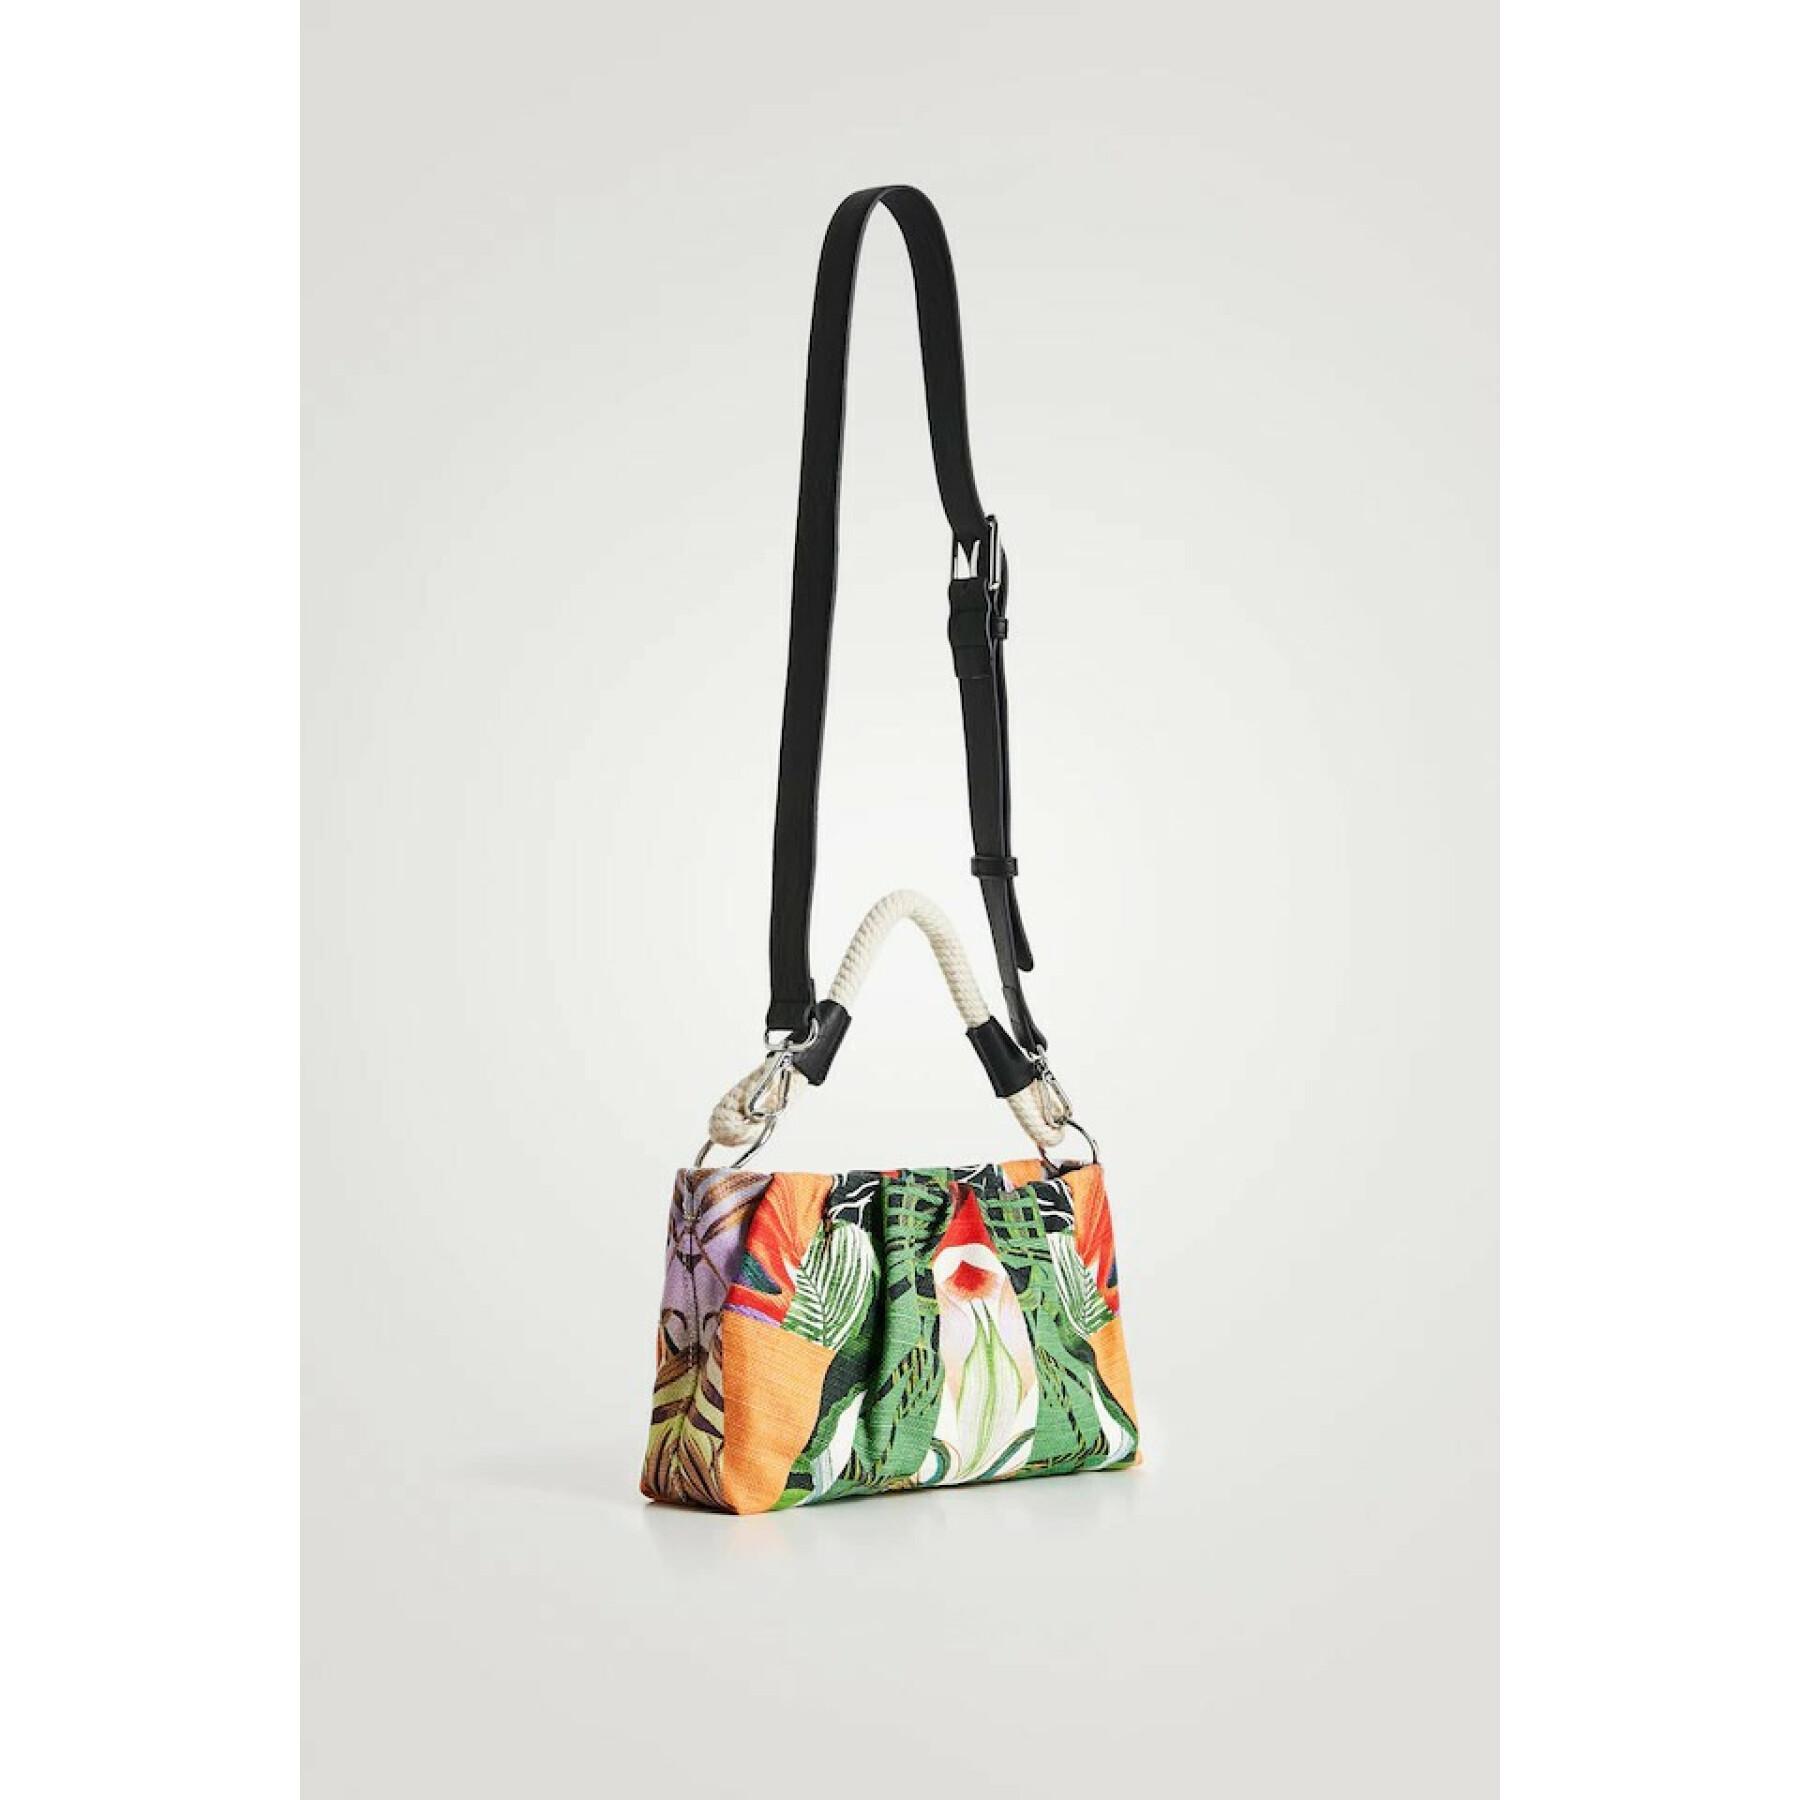 Women's handbag Desigual Urban Beach Otterlo